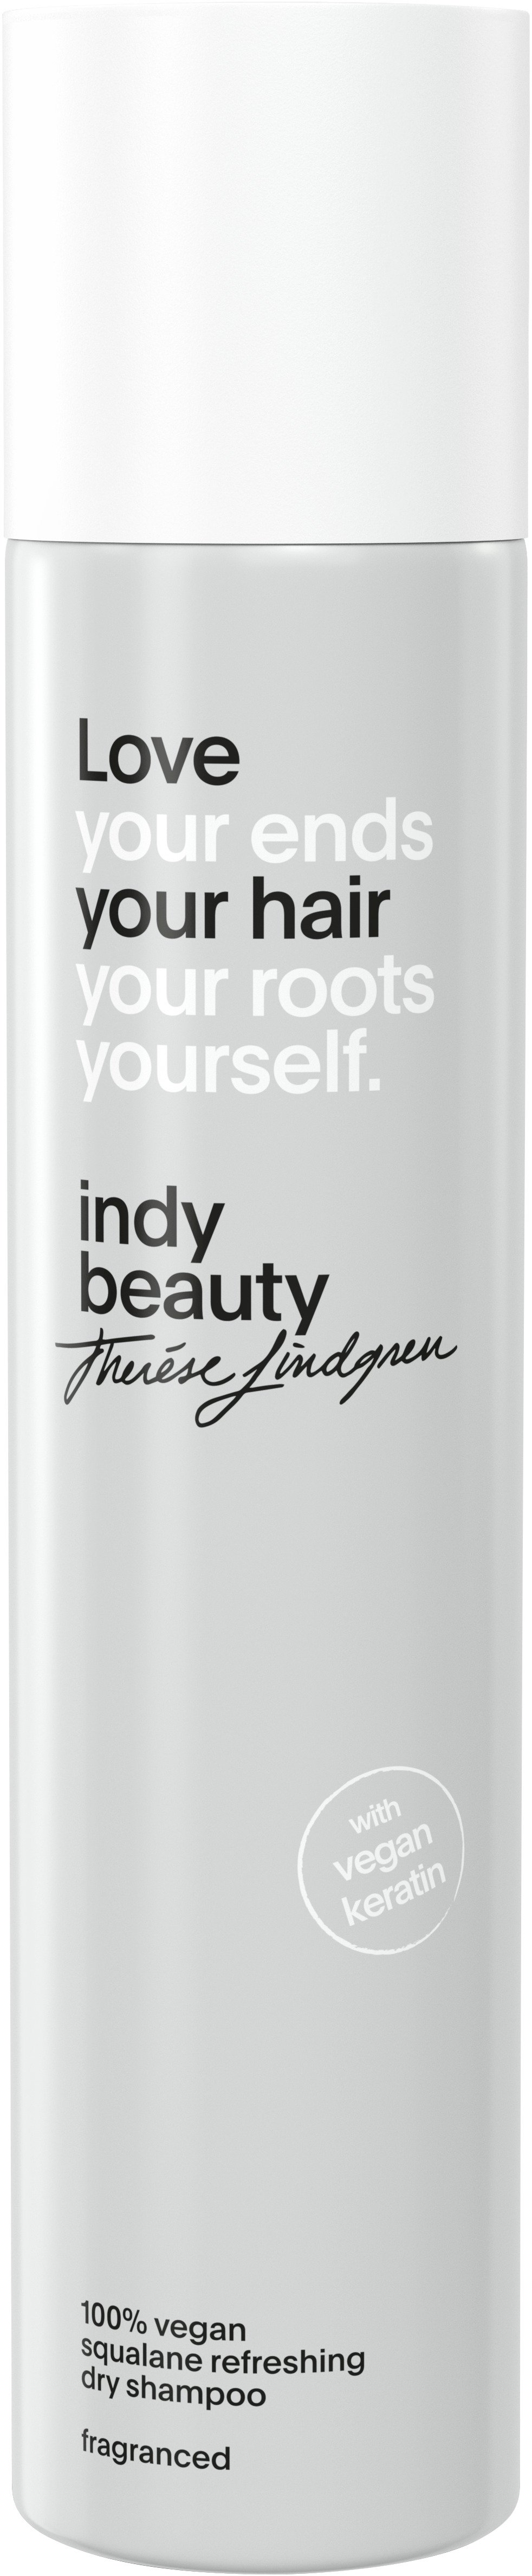 Indy Beauty Squalane Refreshing Dry Shampoo 200ml